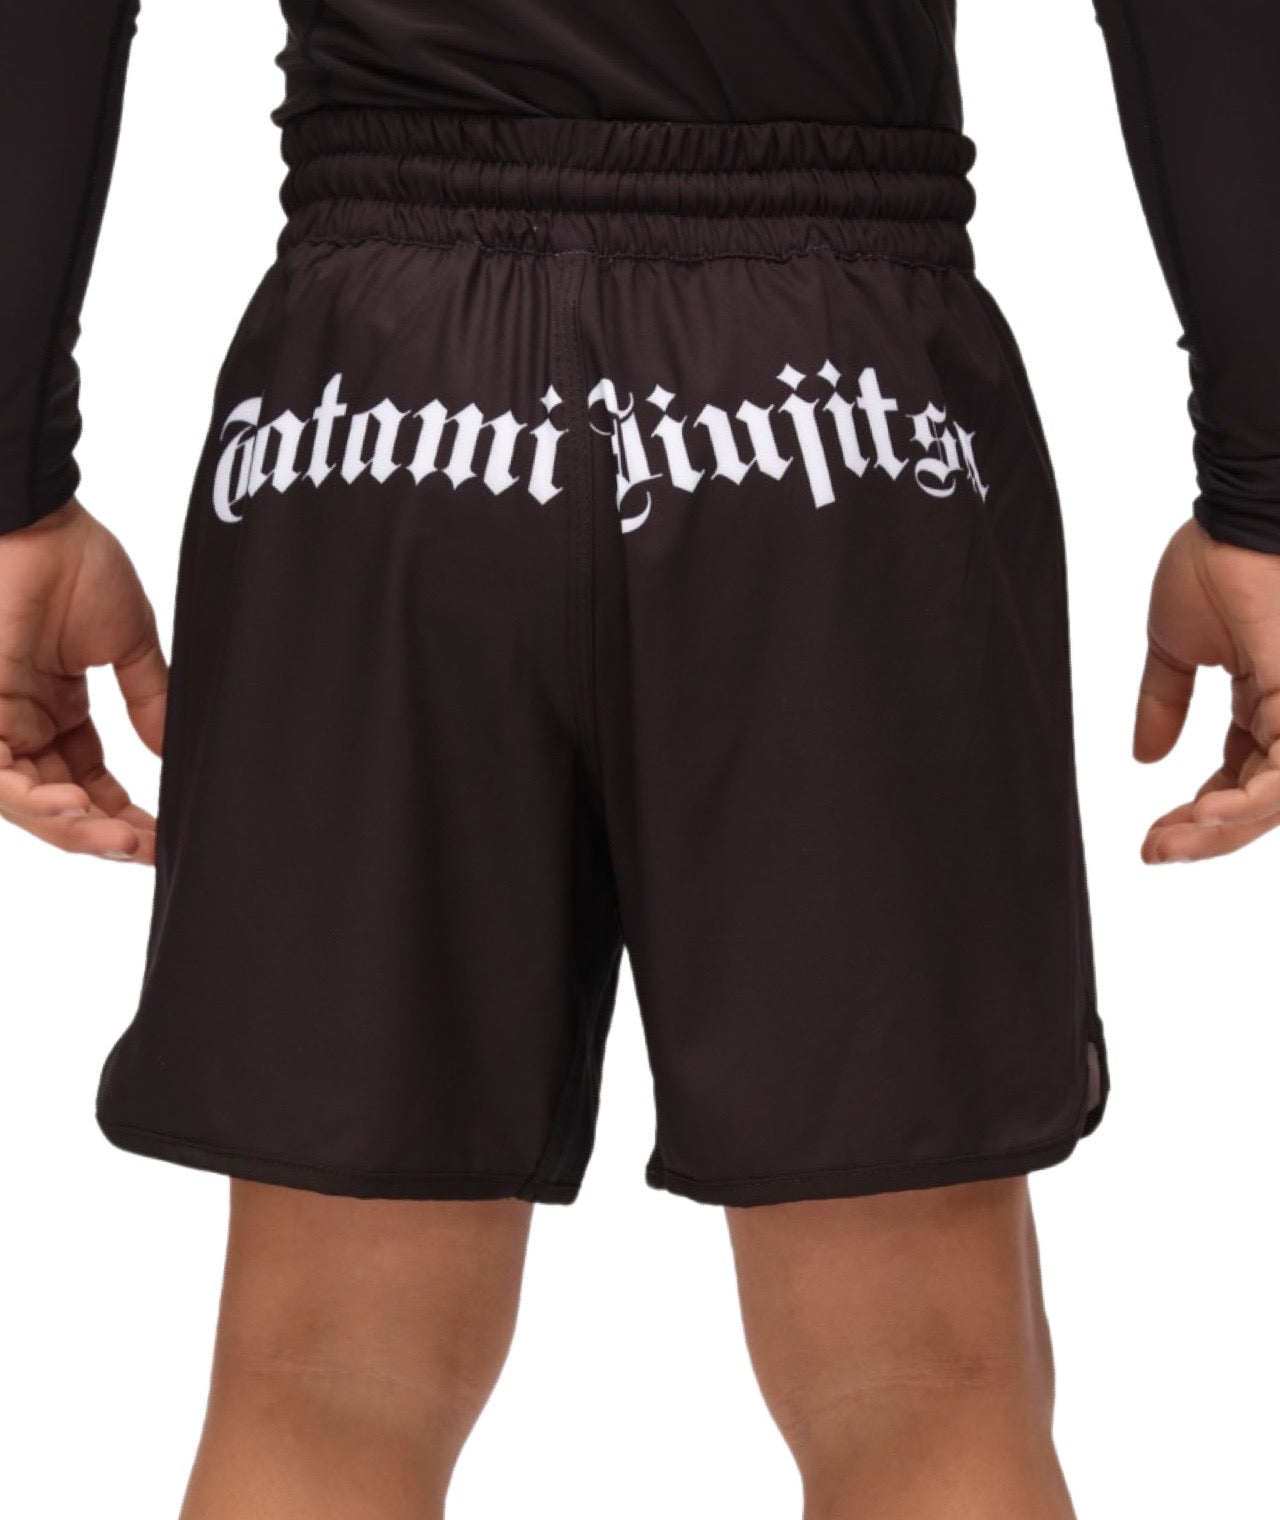 Kids Gothic Grappling Shorts